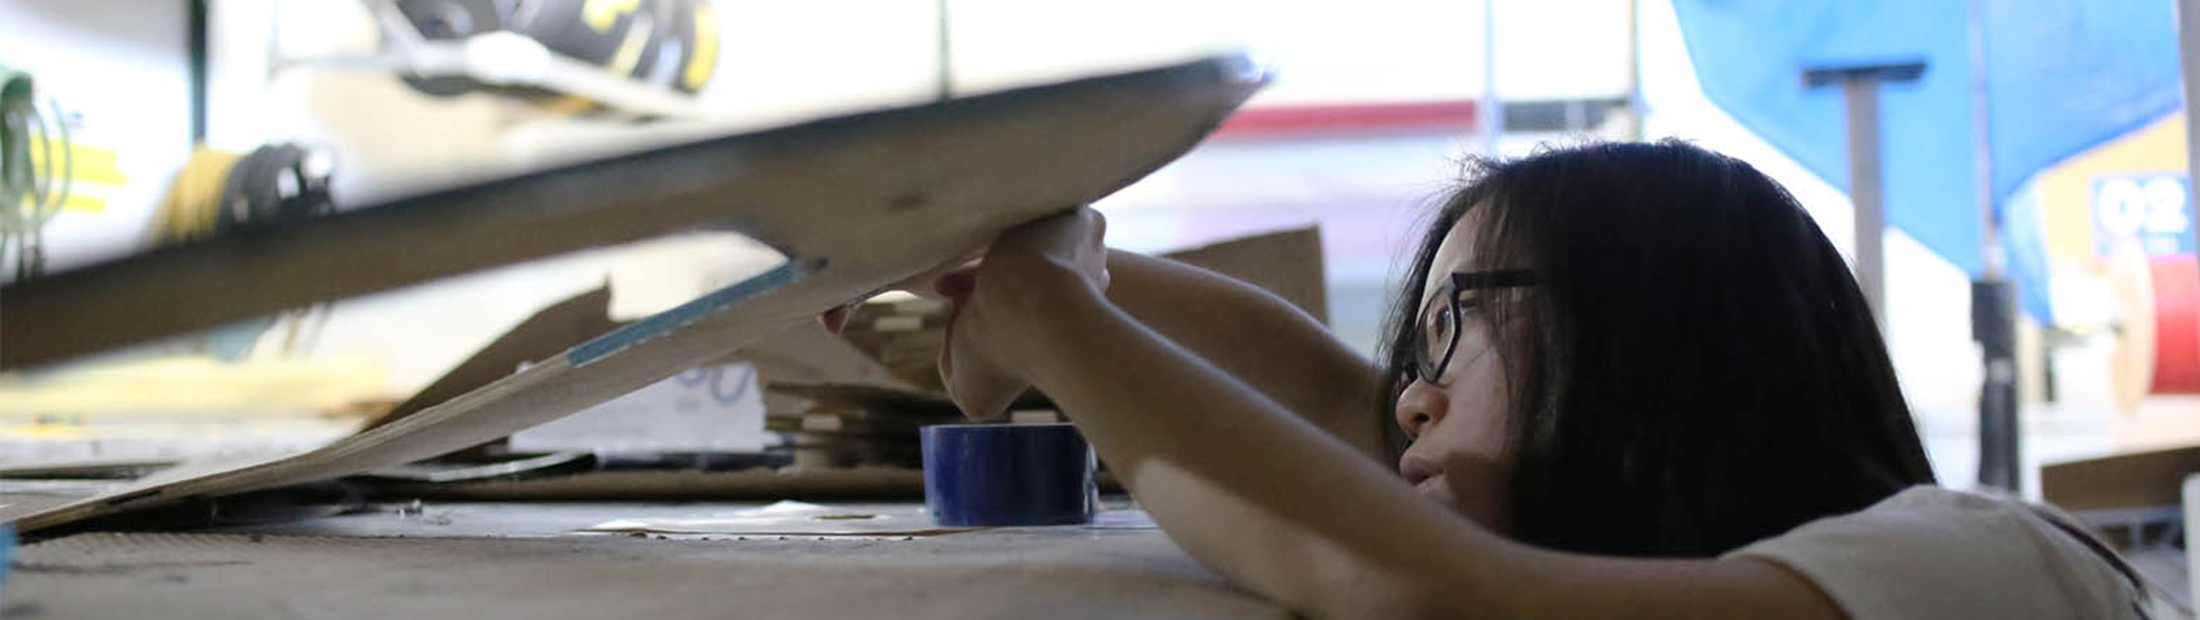 A girl working on a carbon fiber sheet on a workbench.